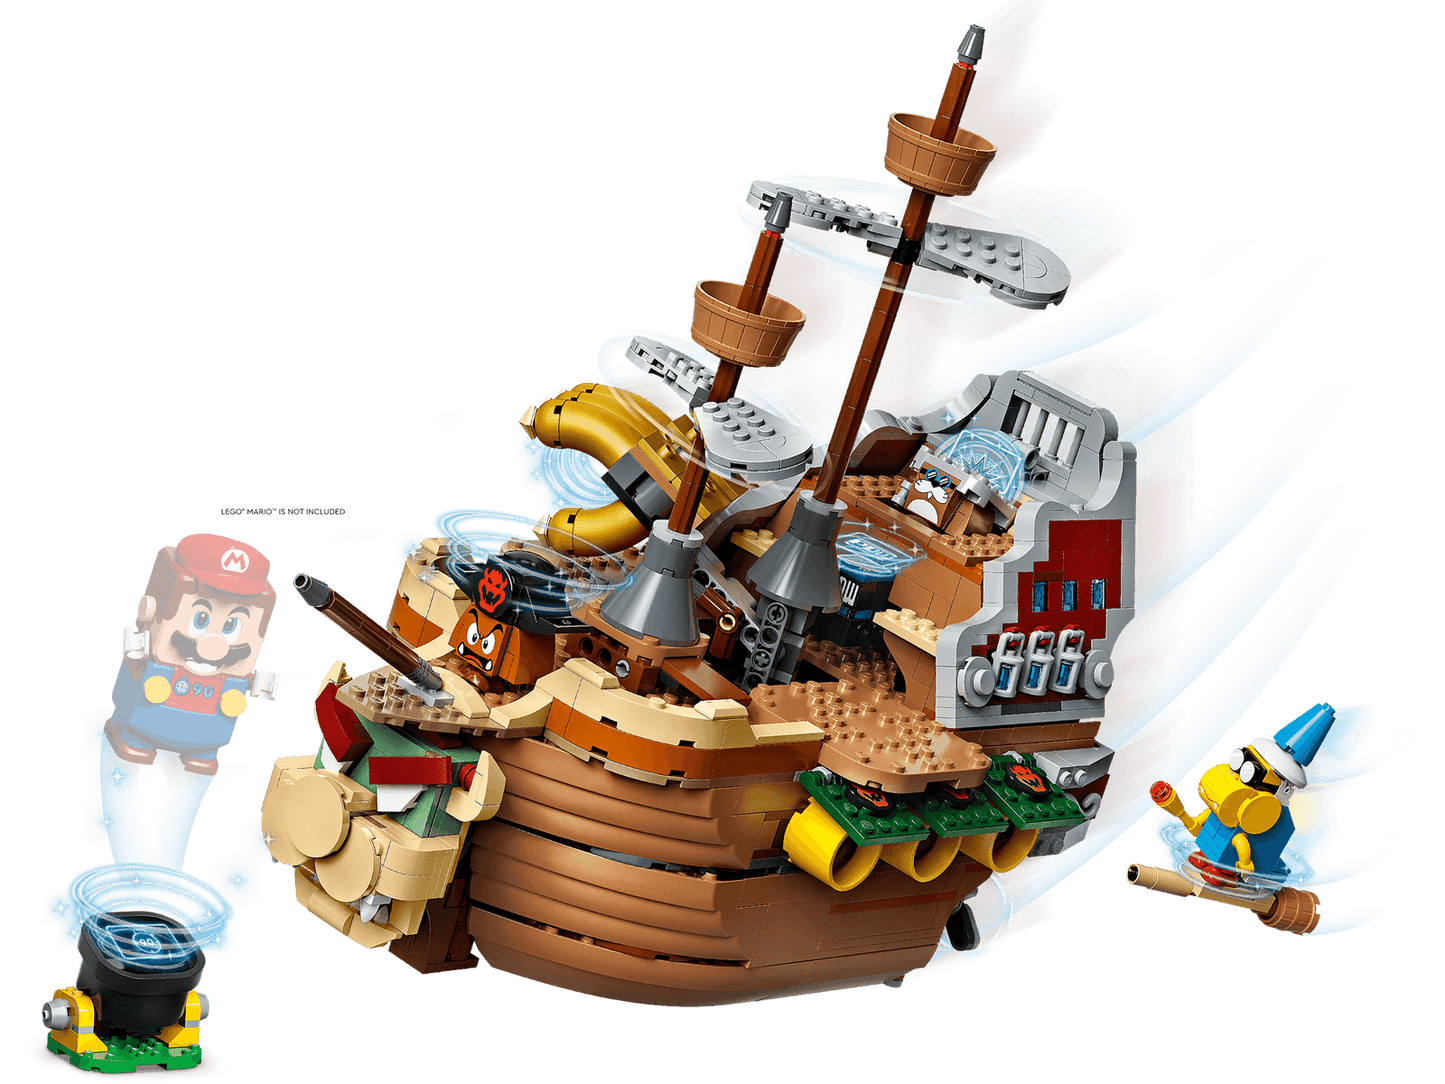 Lego Super Mario Bowser's Airship Expansion Set 71391